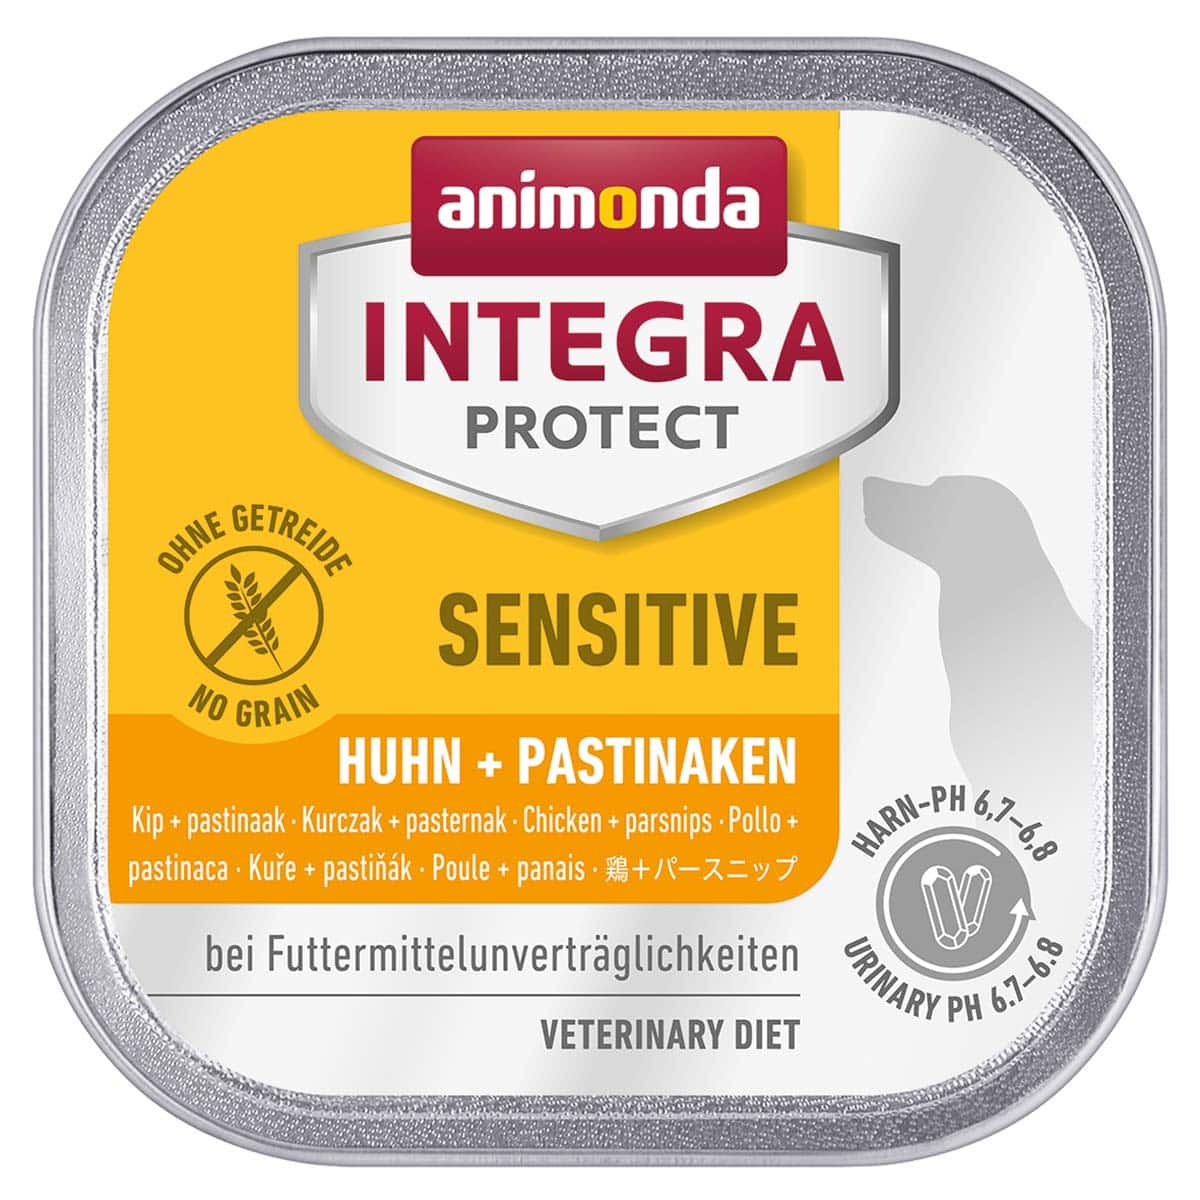 animonda Integra Protect Sensitive Huhn und Pastinaken 11x150g